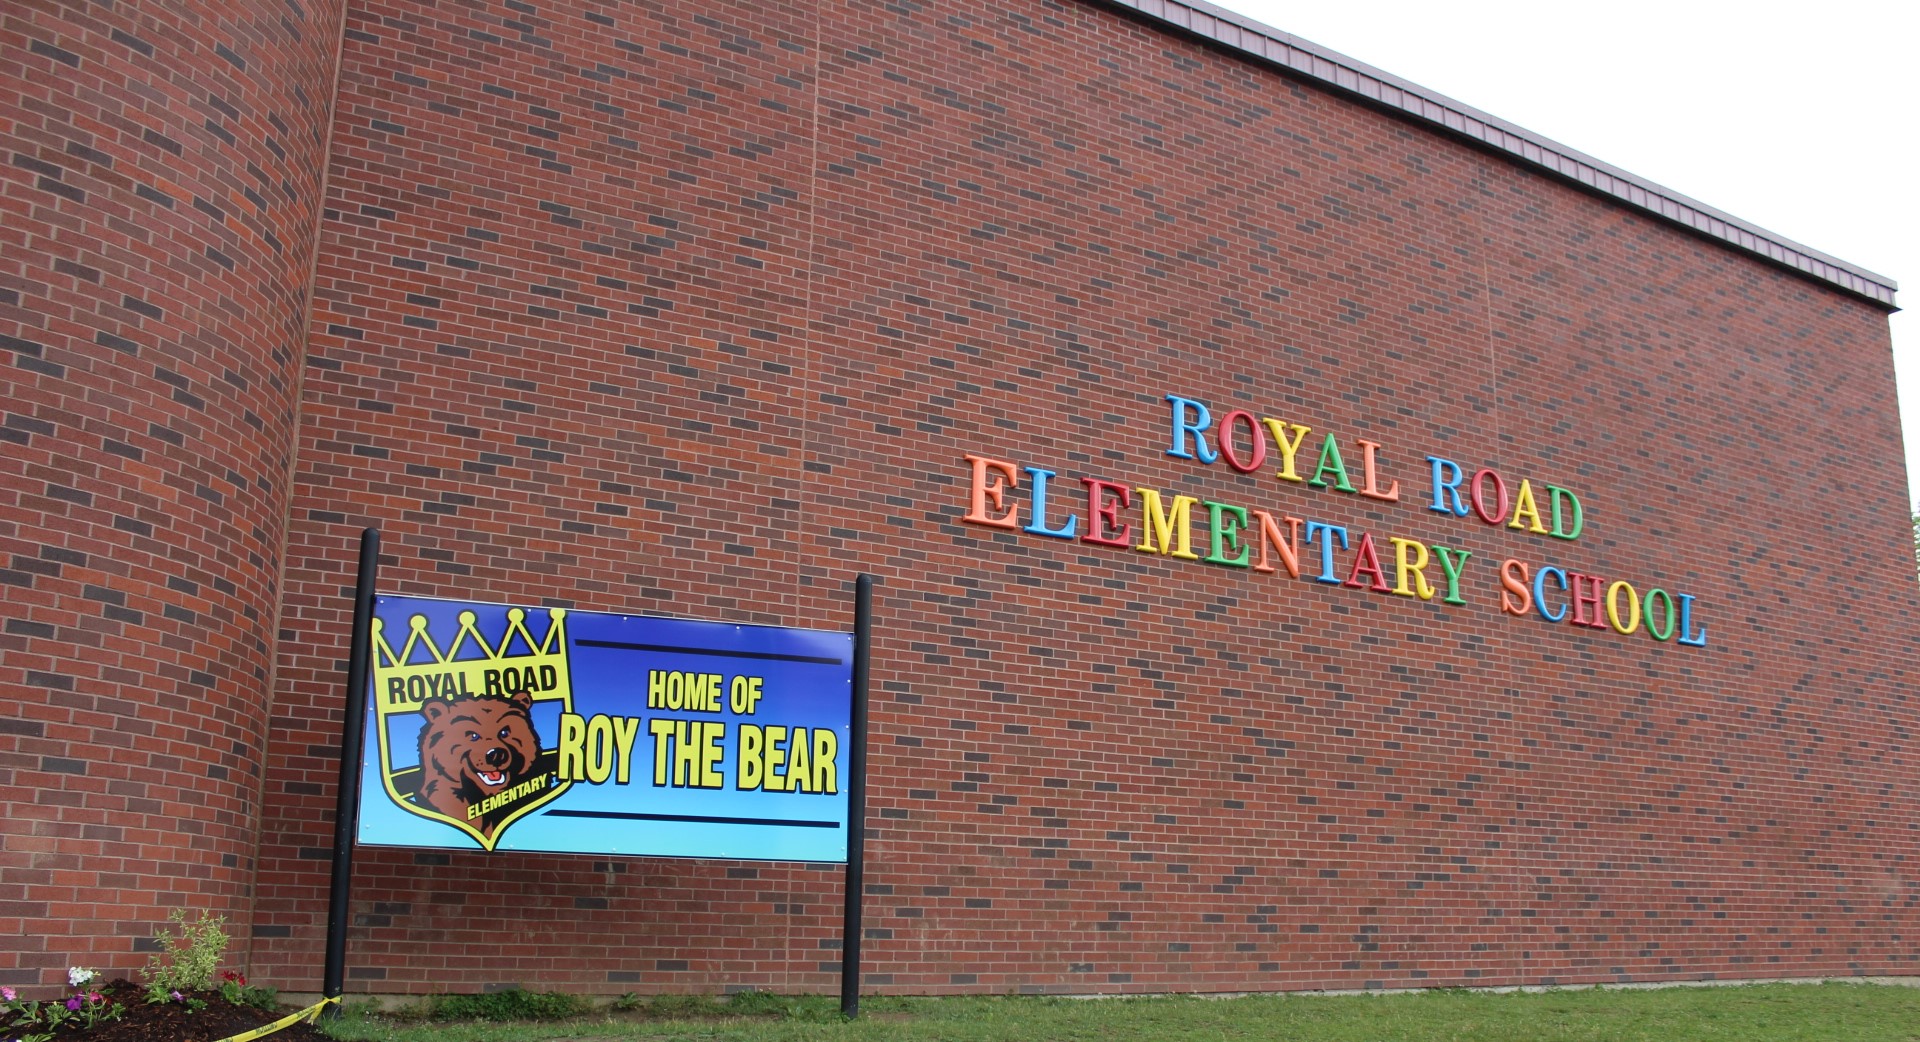 Royal Road Elementary School.